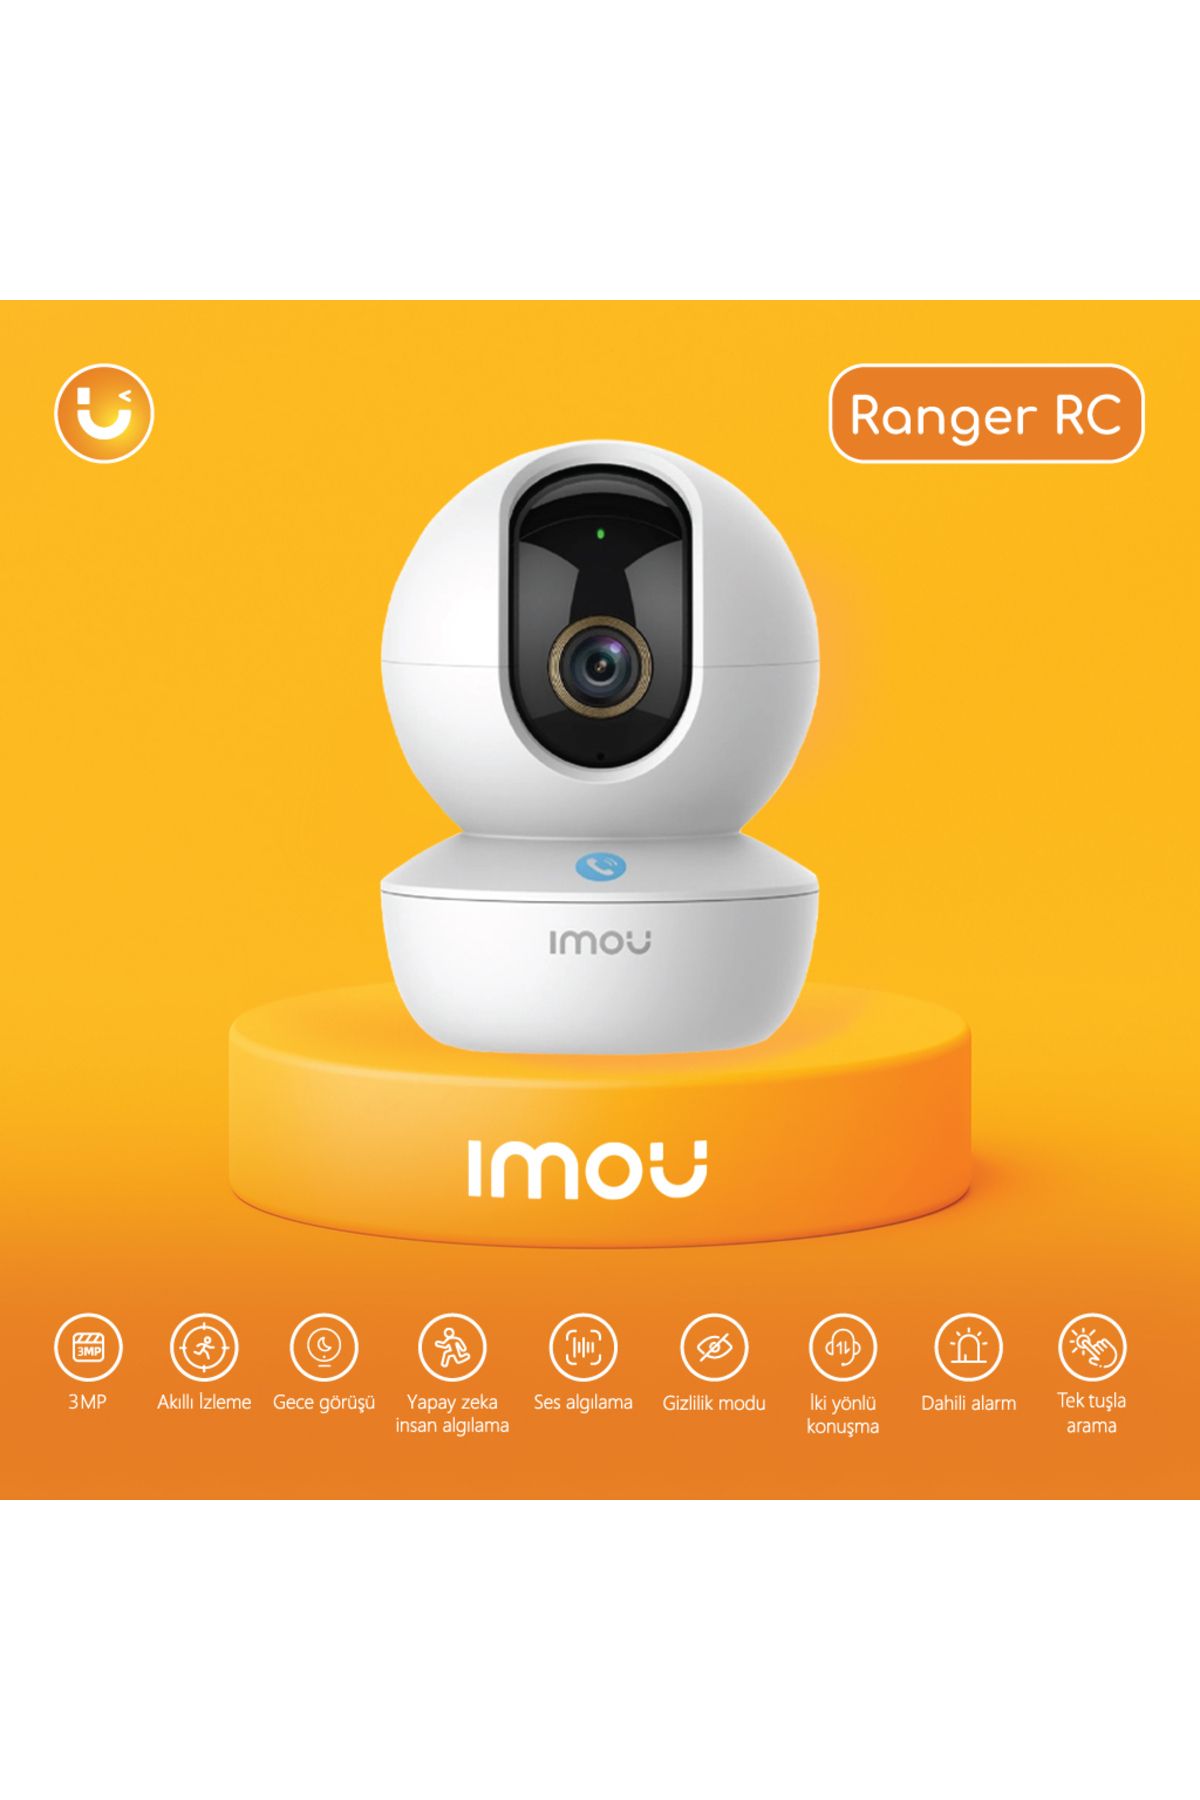 Imou Ranger Rc 3 Mp Iç Ortam Wi-fi Pt Kamera - Çift Yönlü Konuşma - Tek Tuşla Arama (IPC-GK2CP-3C0WR)